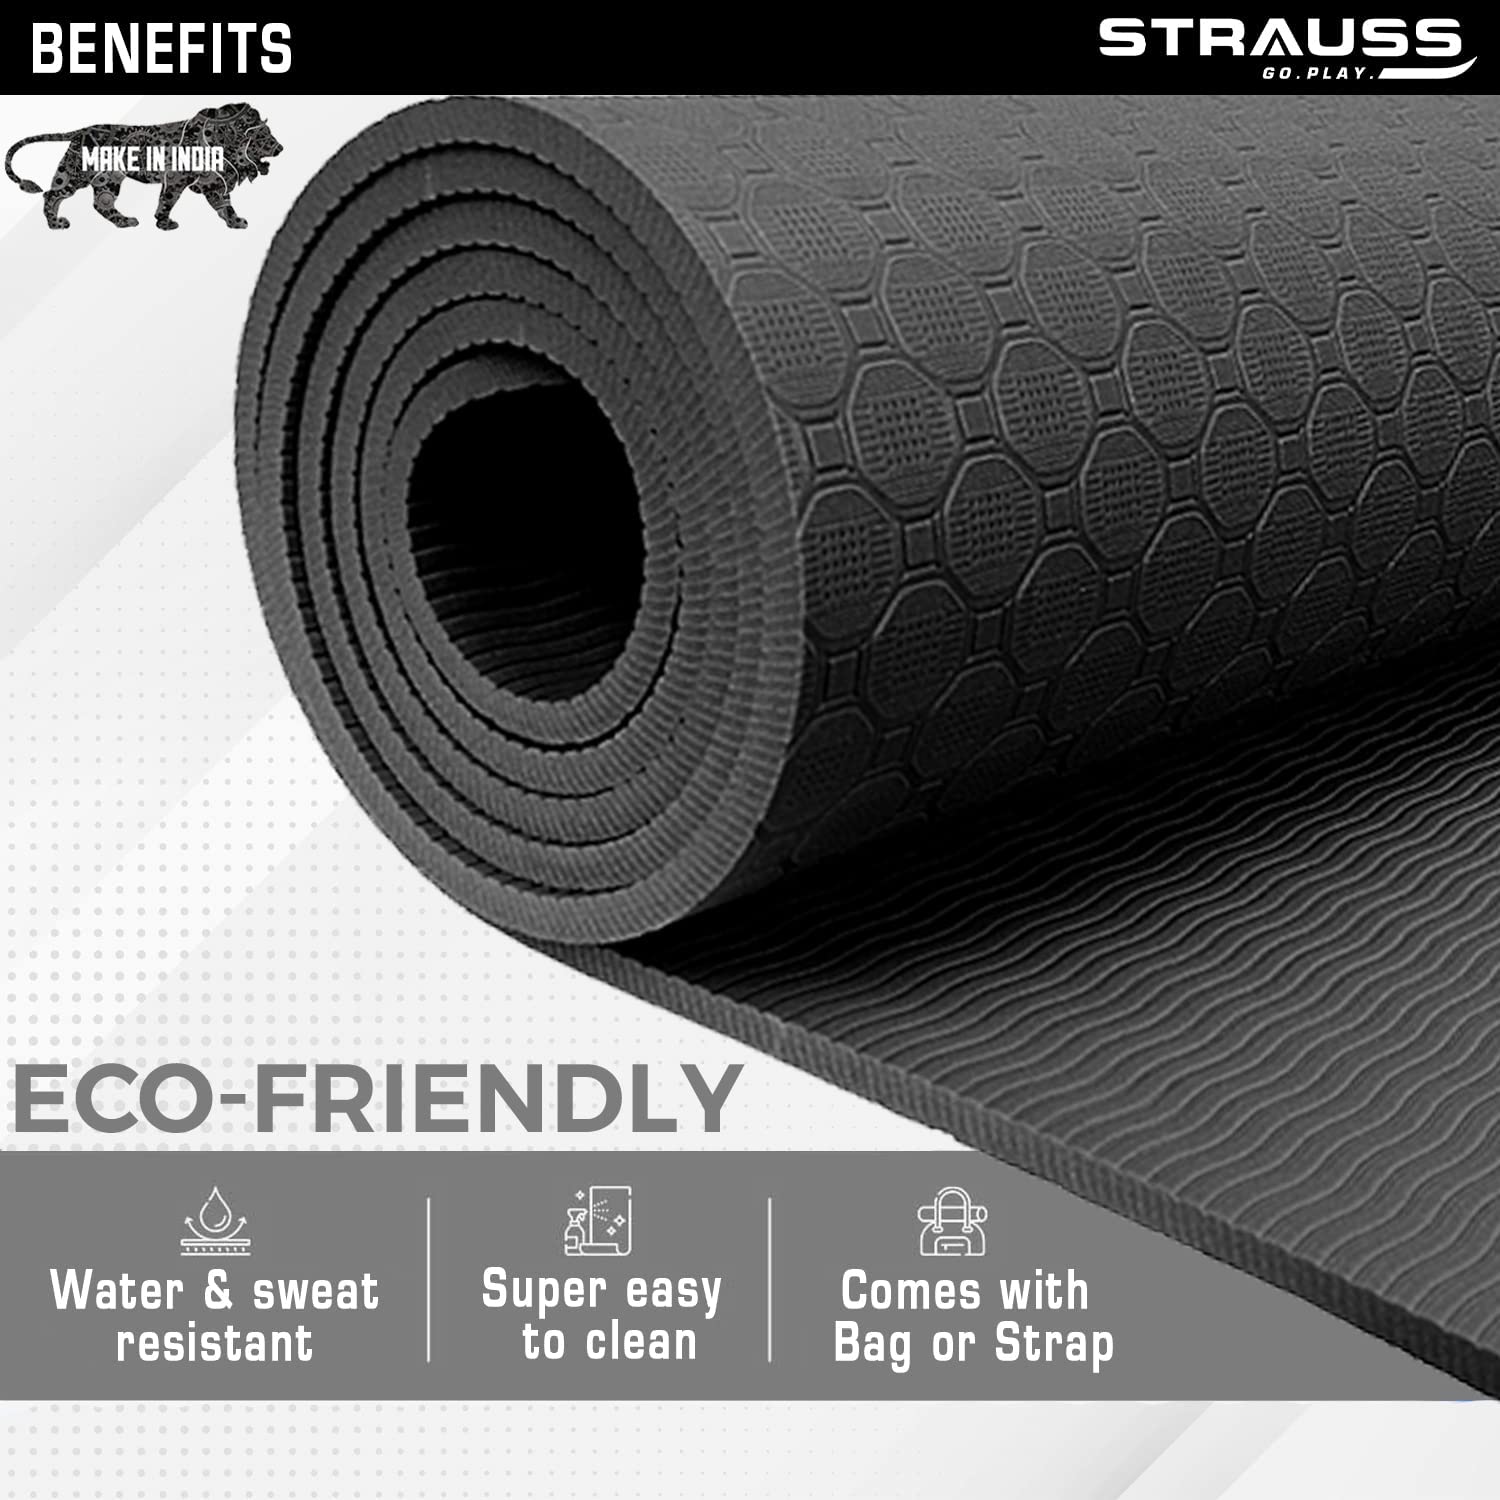 Strauss Anti Skid TPE Yoga Mat with Carry Bag, 8mm, (Black)